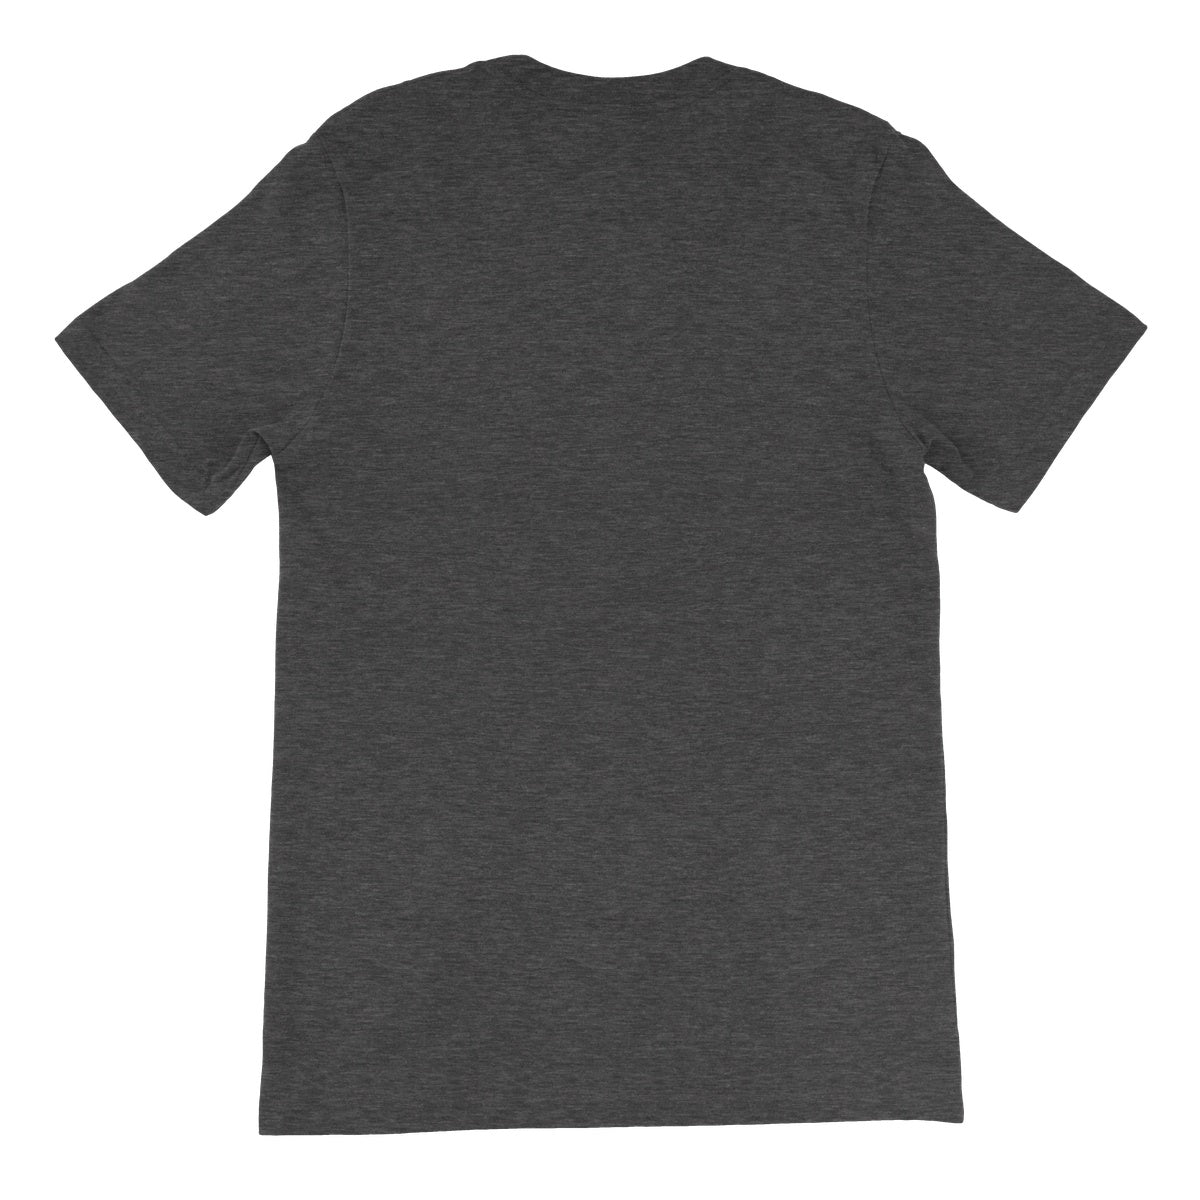 Fly Illustrated Tee Unisex Short Sleeve T-Shirt